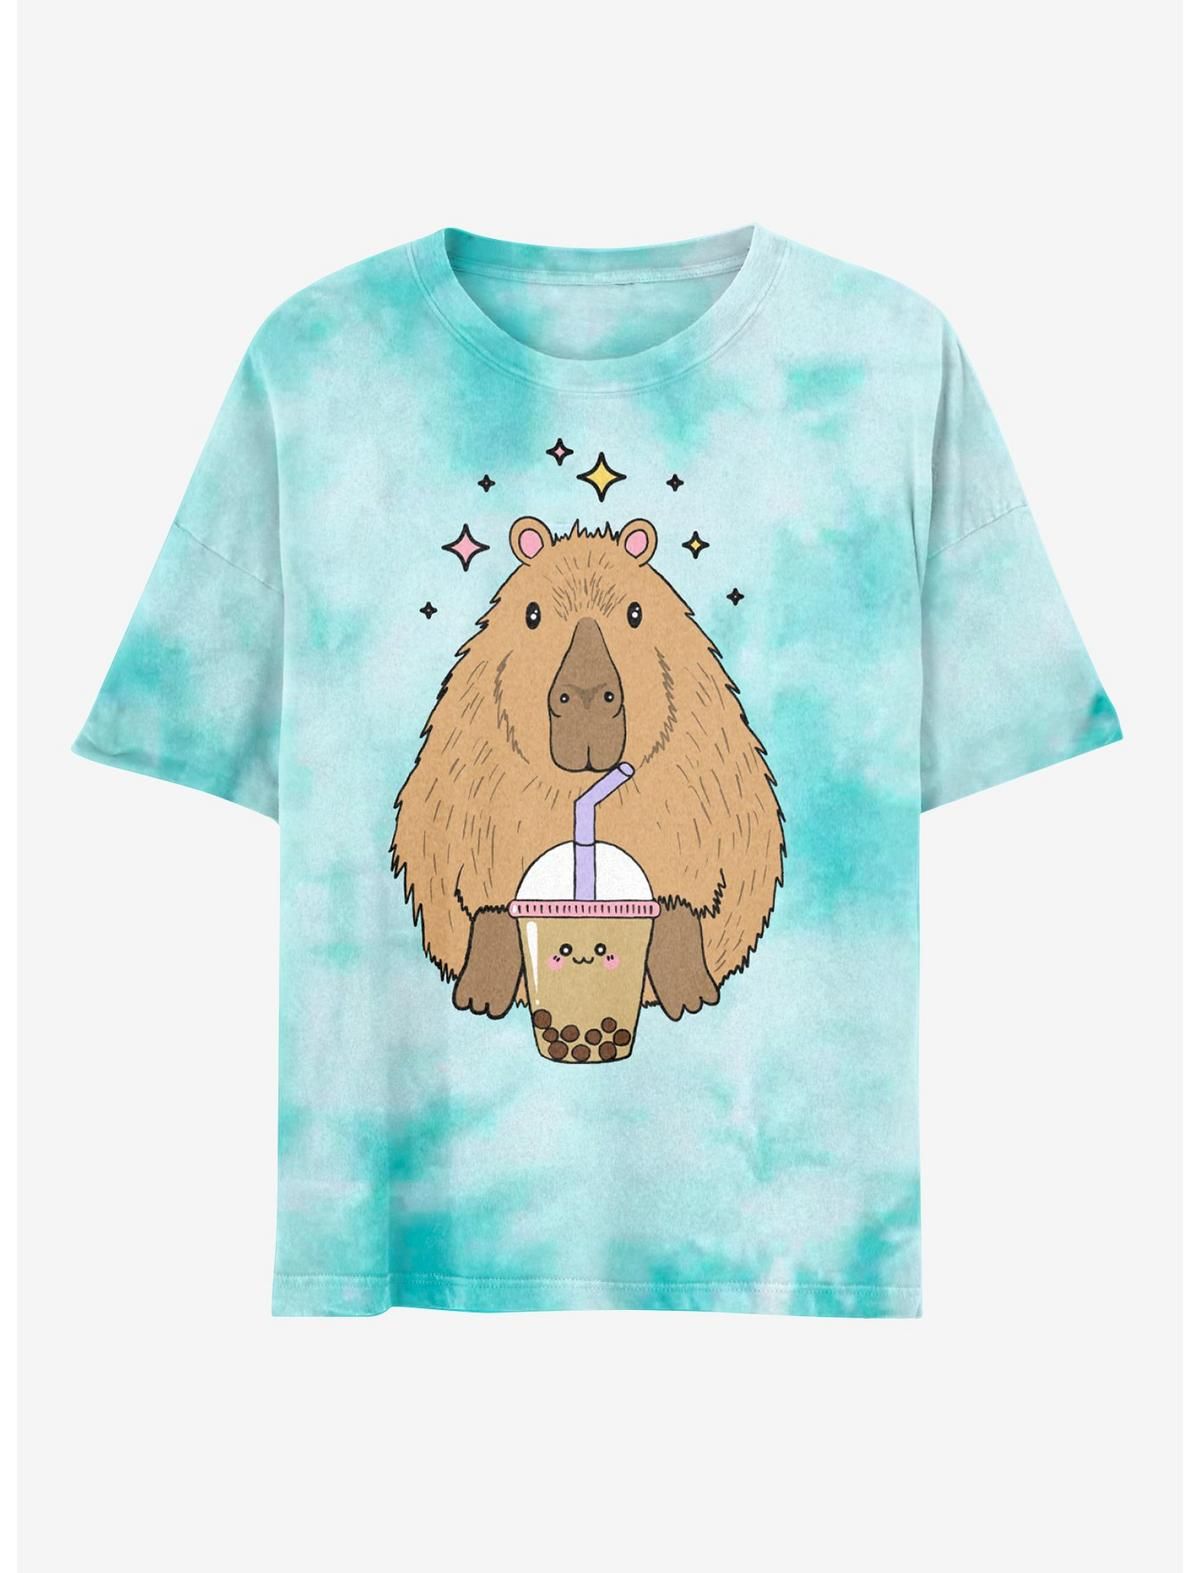 Capybara Boba Tie-Dye Boyfriend Fit Girls T-Shirt | Hot Topic | Hot Topic